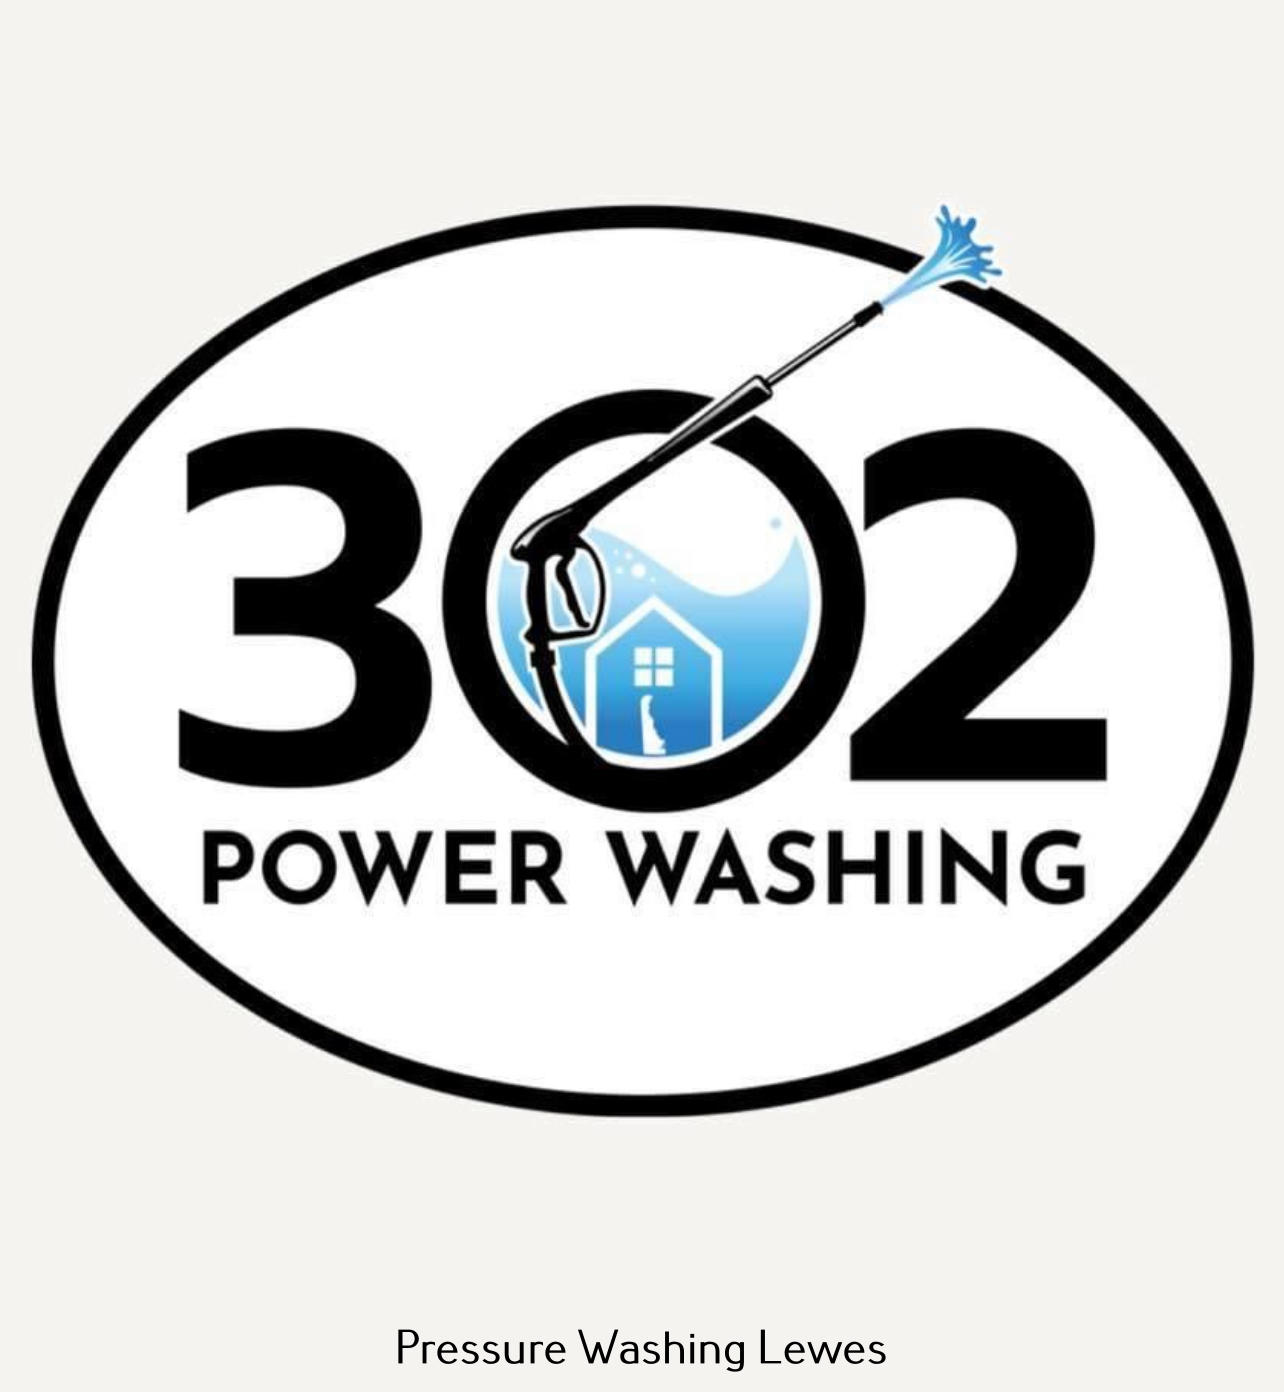 302 Power Washing Explains the Discrepancies Between Power Washing and Pressure Washing